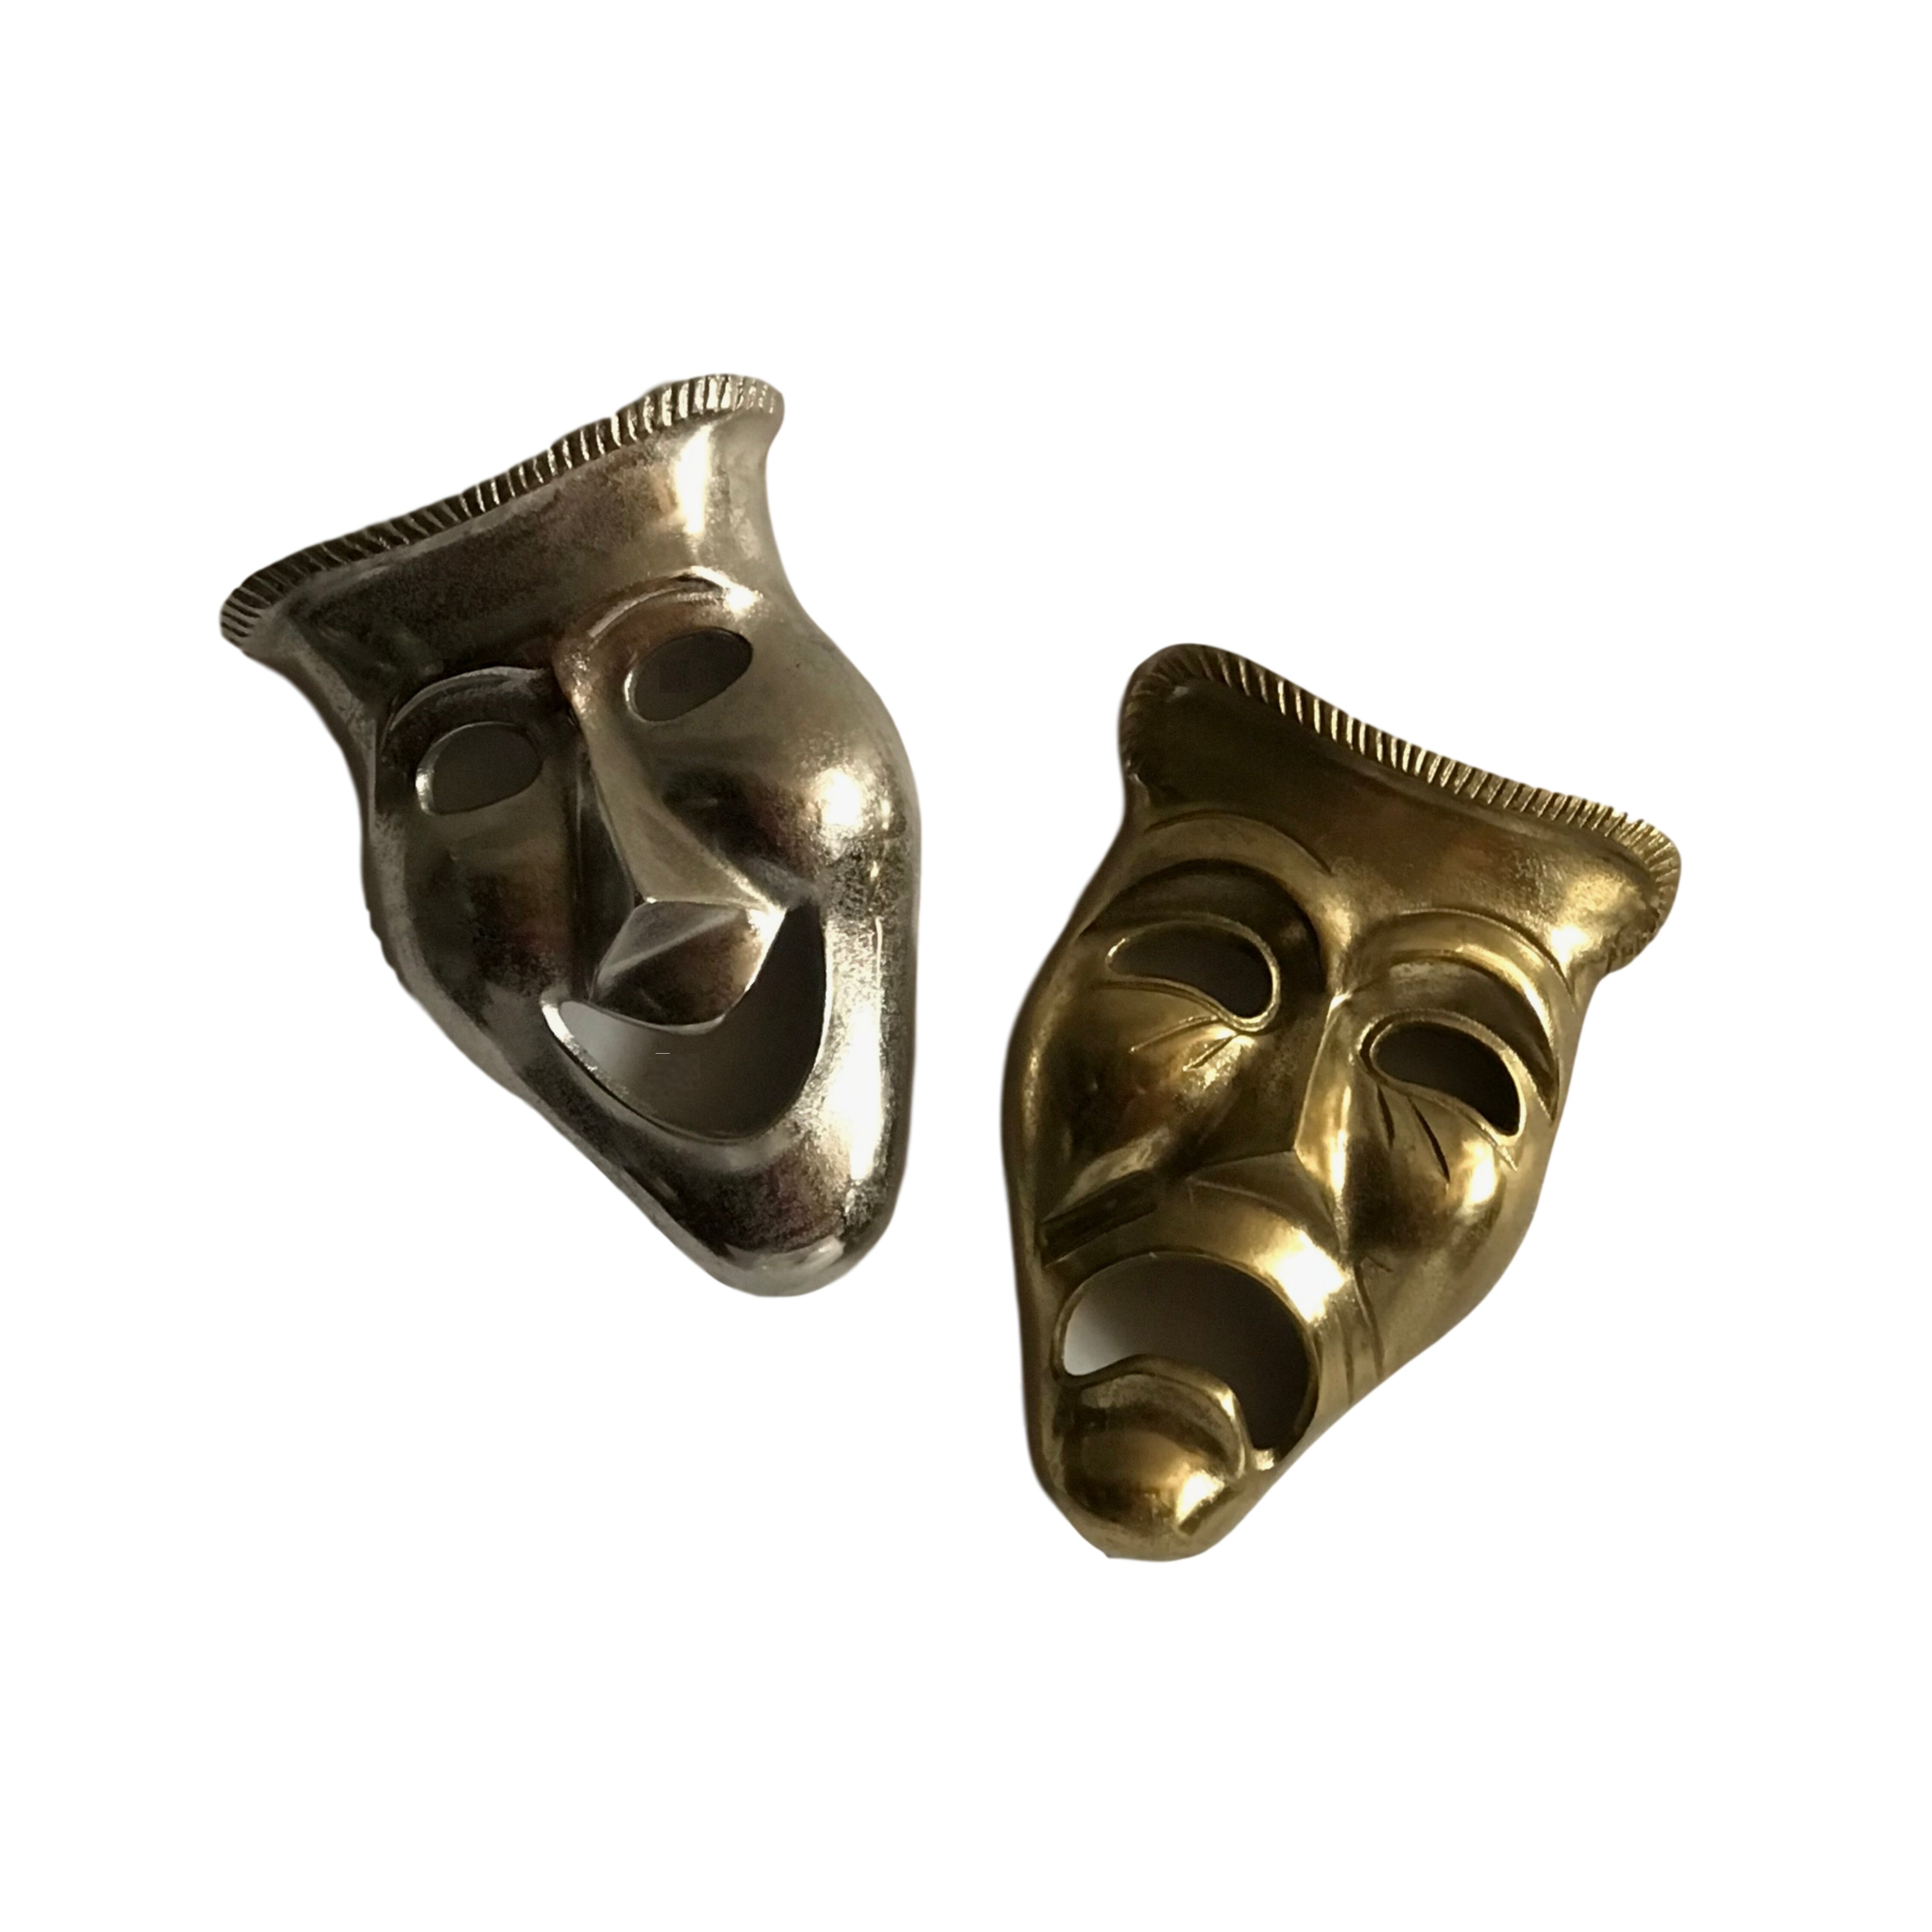 Greek Comedy & Tragedy Masks / Theater Masks -  Canada